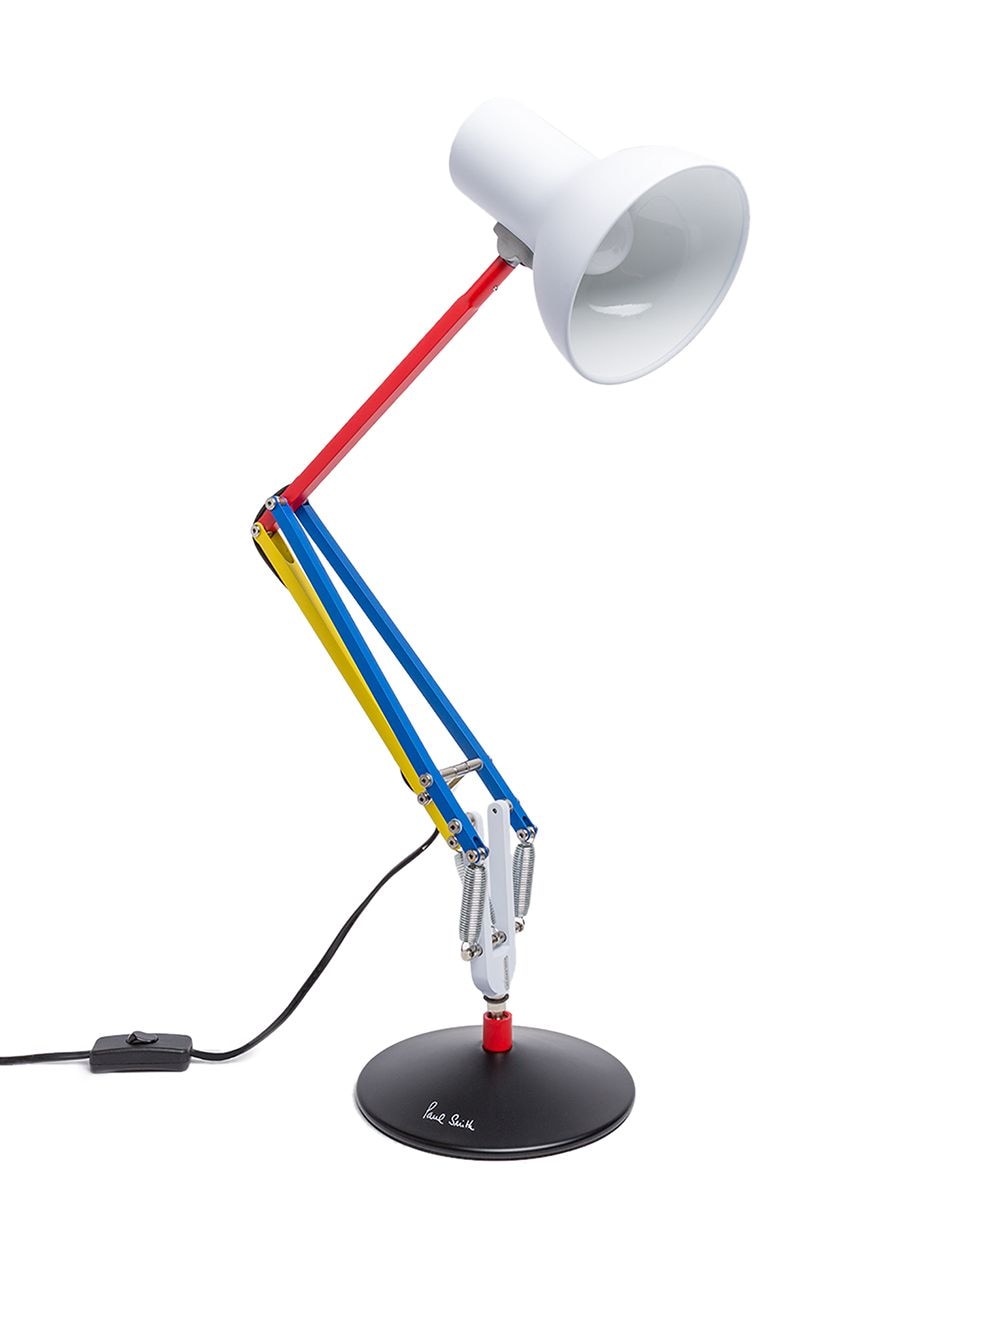 anglepoise paul smith desk lamp - white